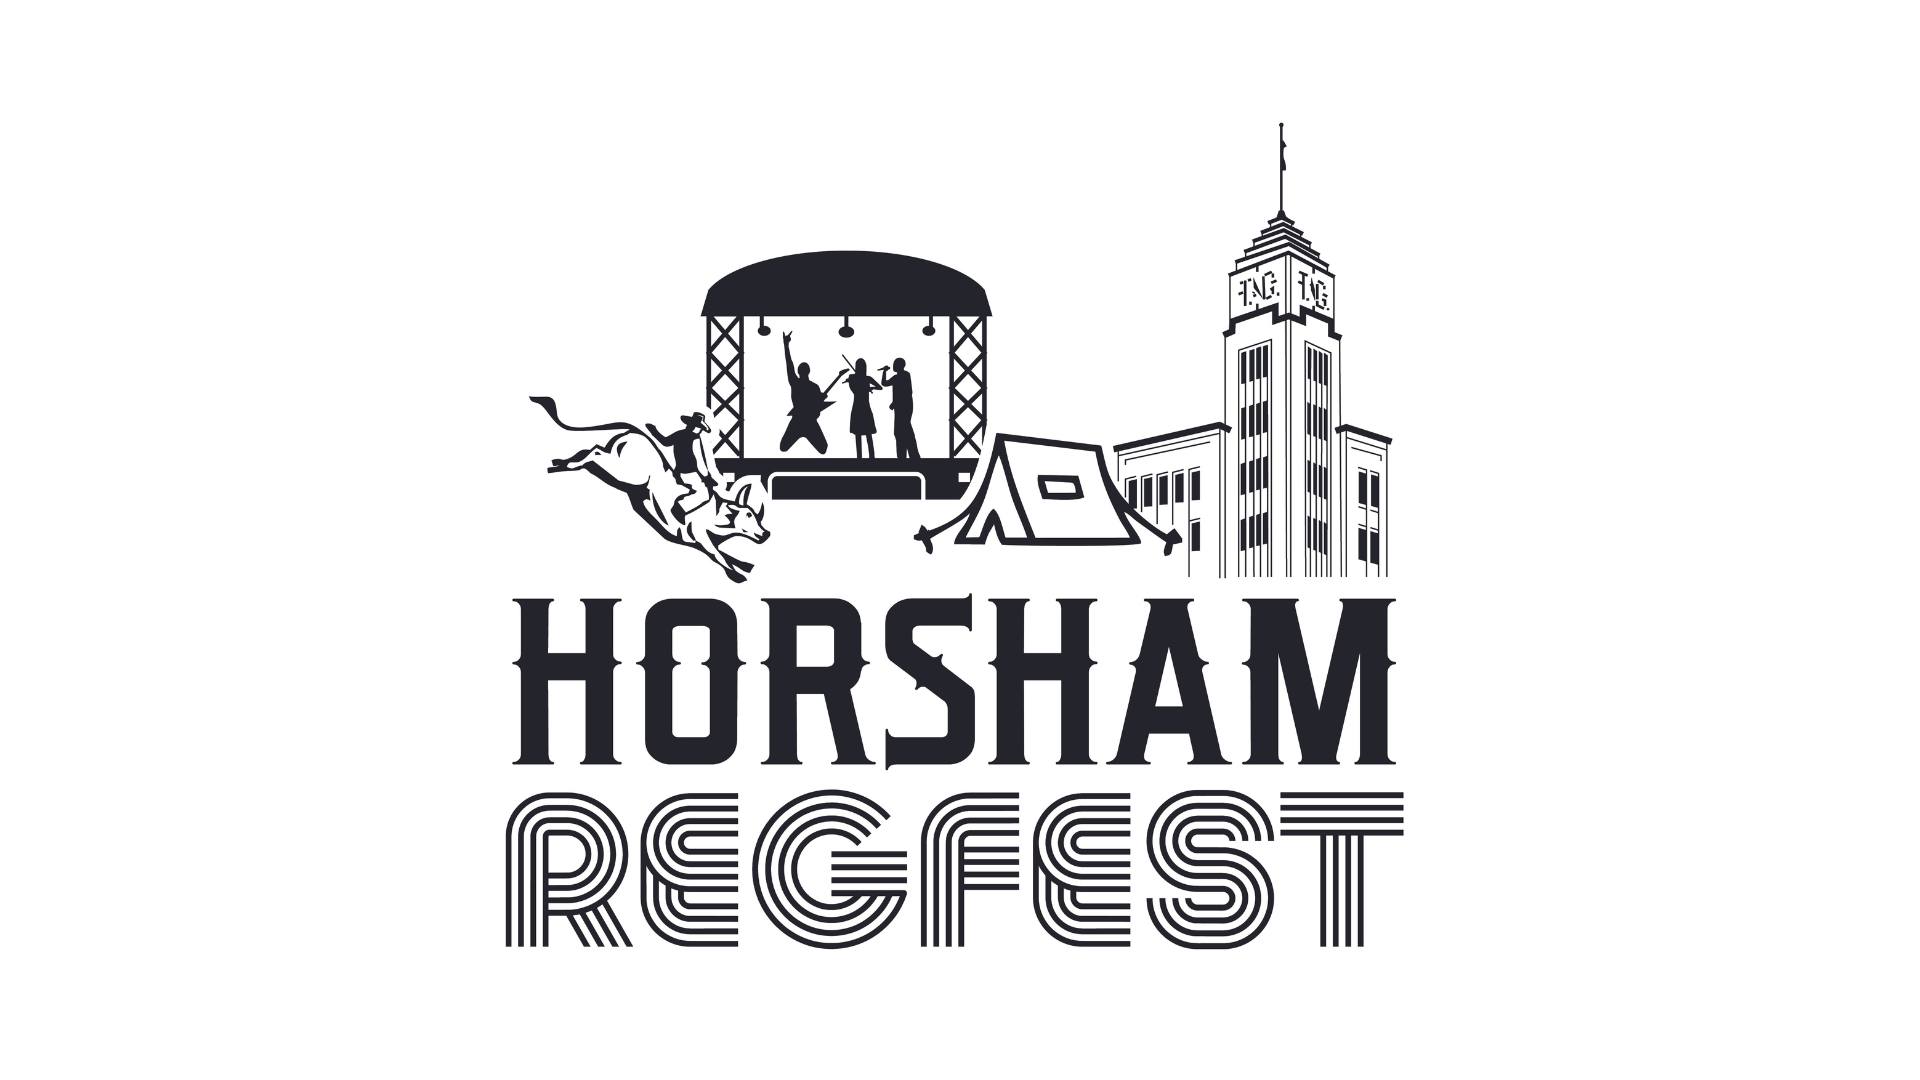 Horsham RegFest.jpg